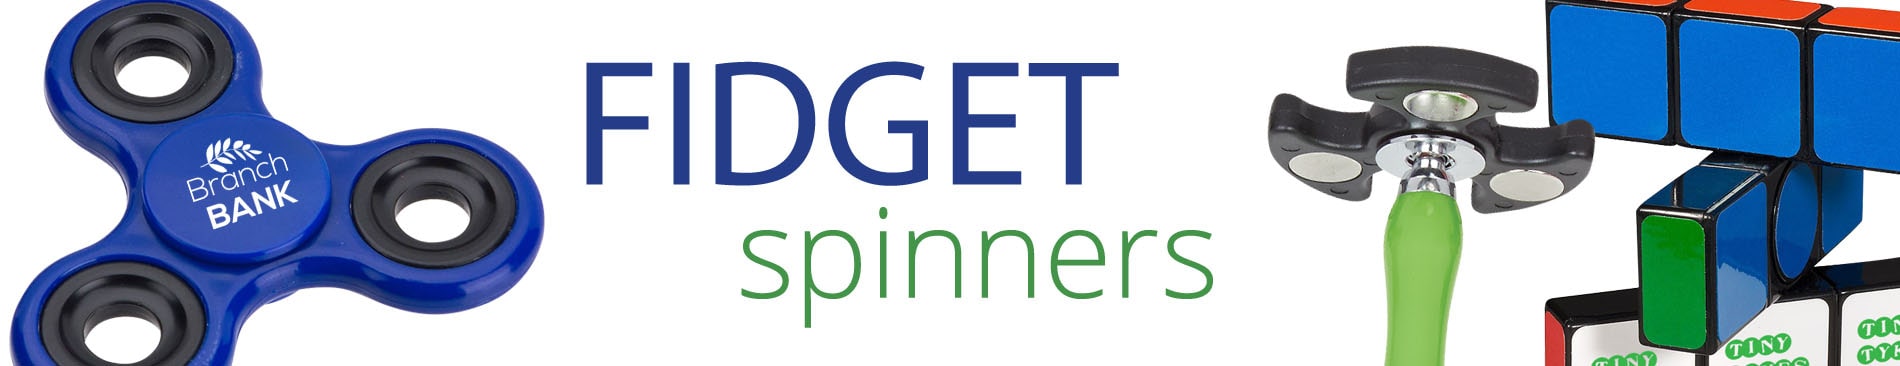 promotional fidget spinners